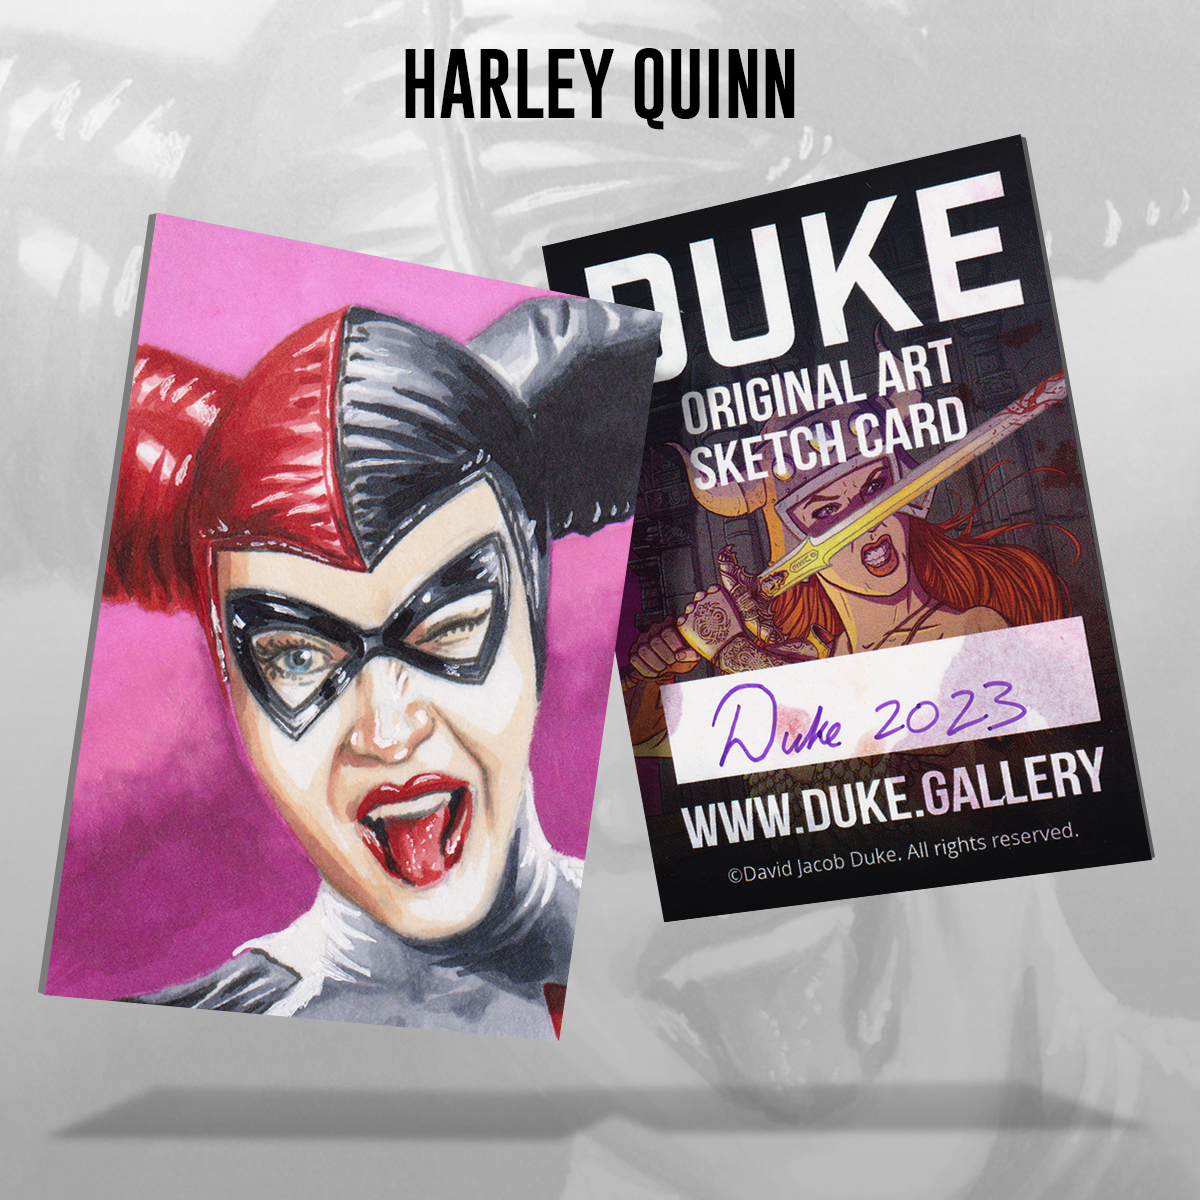 Harley Quinn Sketch Card by Duke